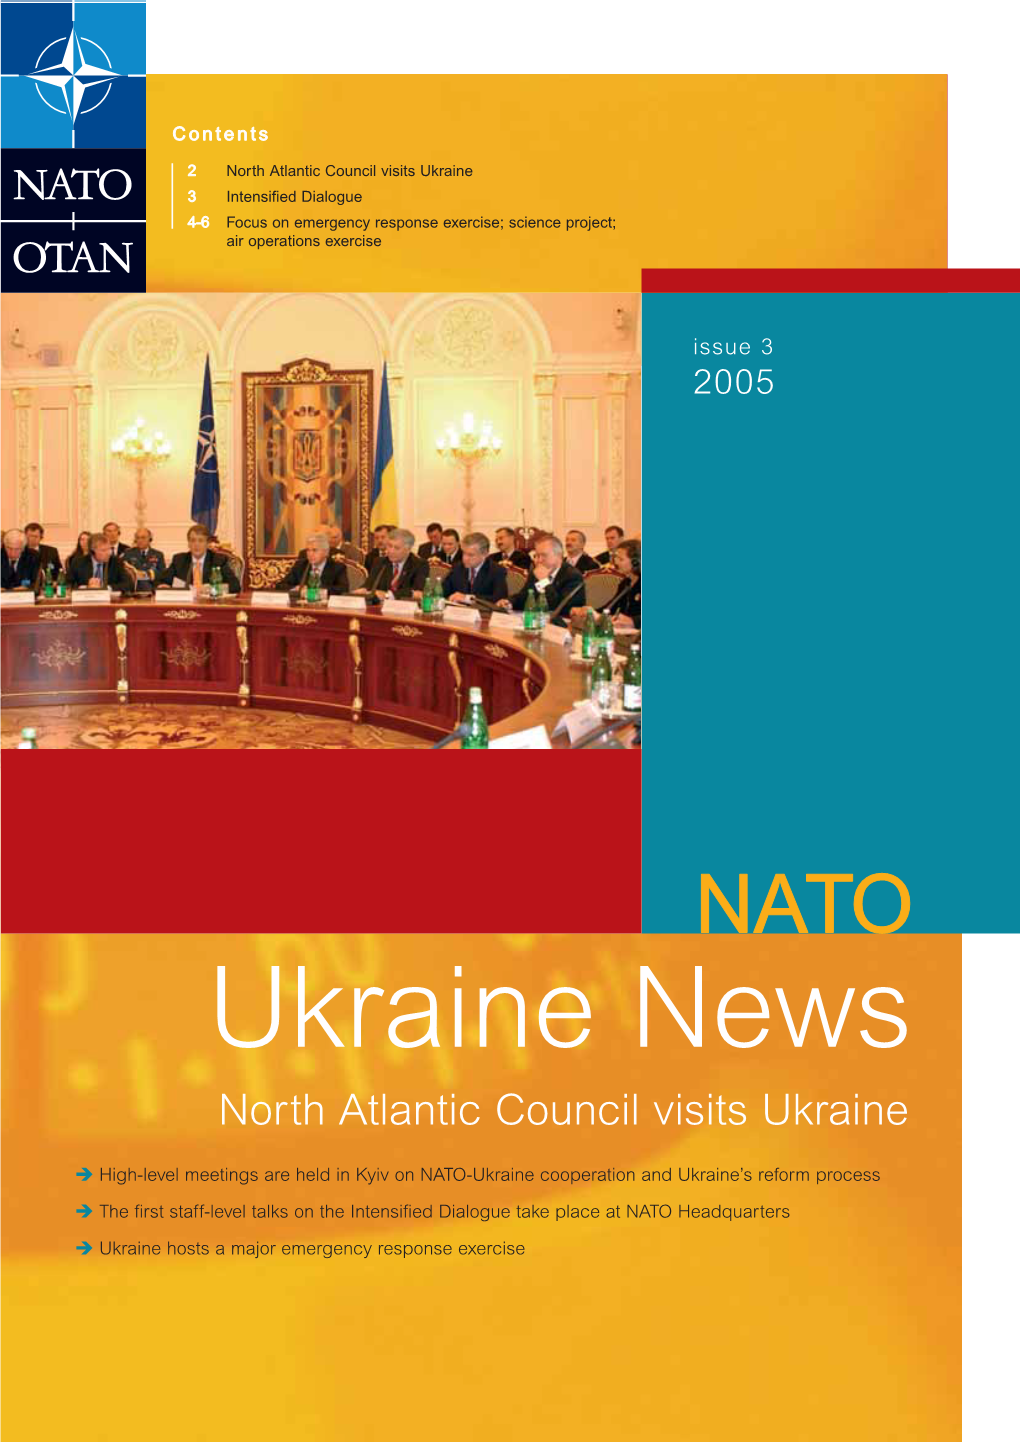 Ukraine News North Atlantic Council Visits Ukraine